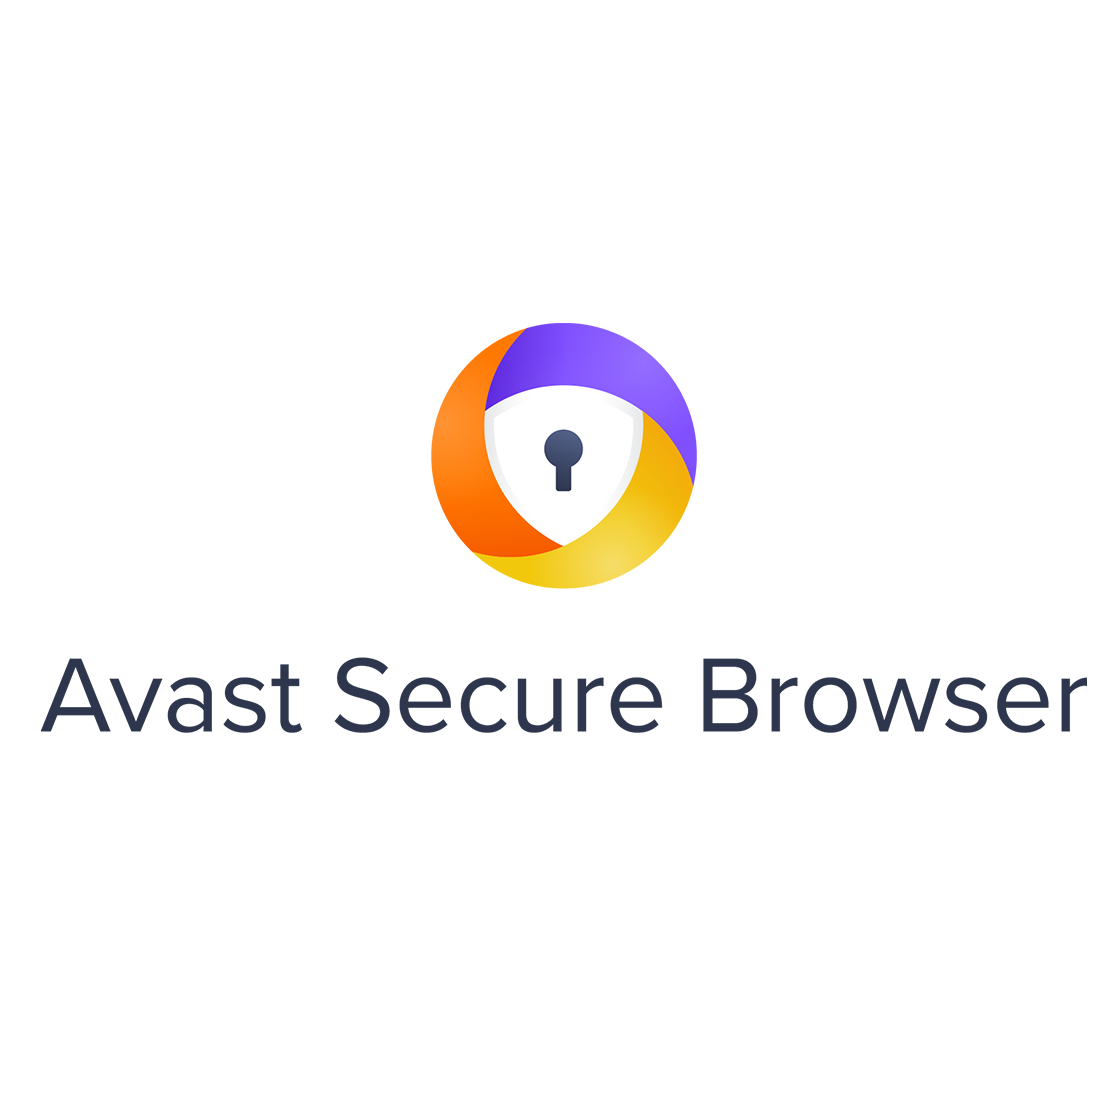 Avast Secure Browser Logo